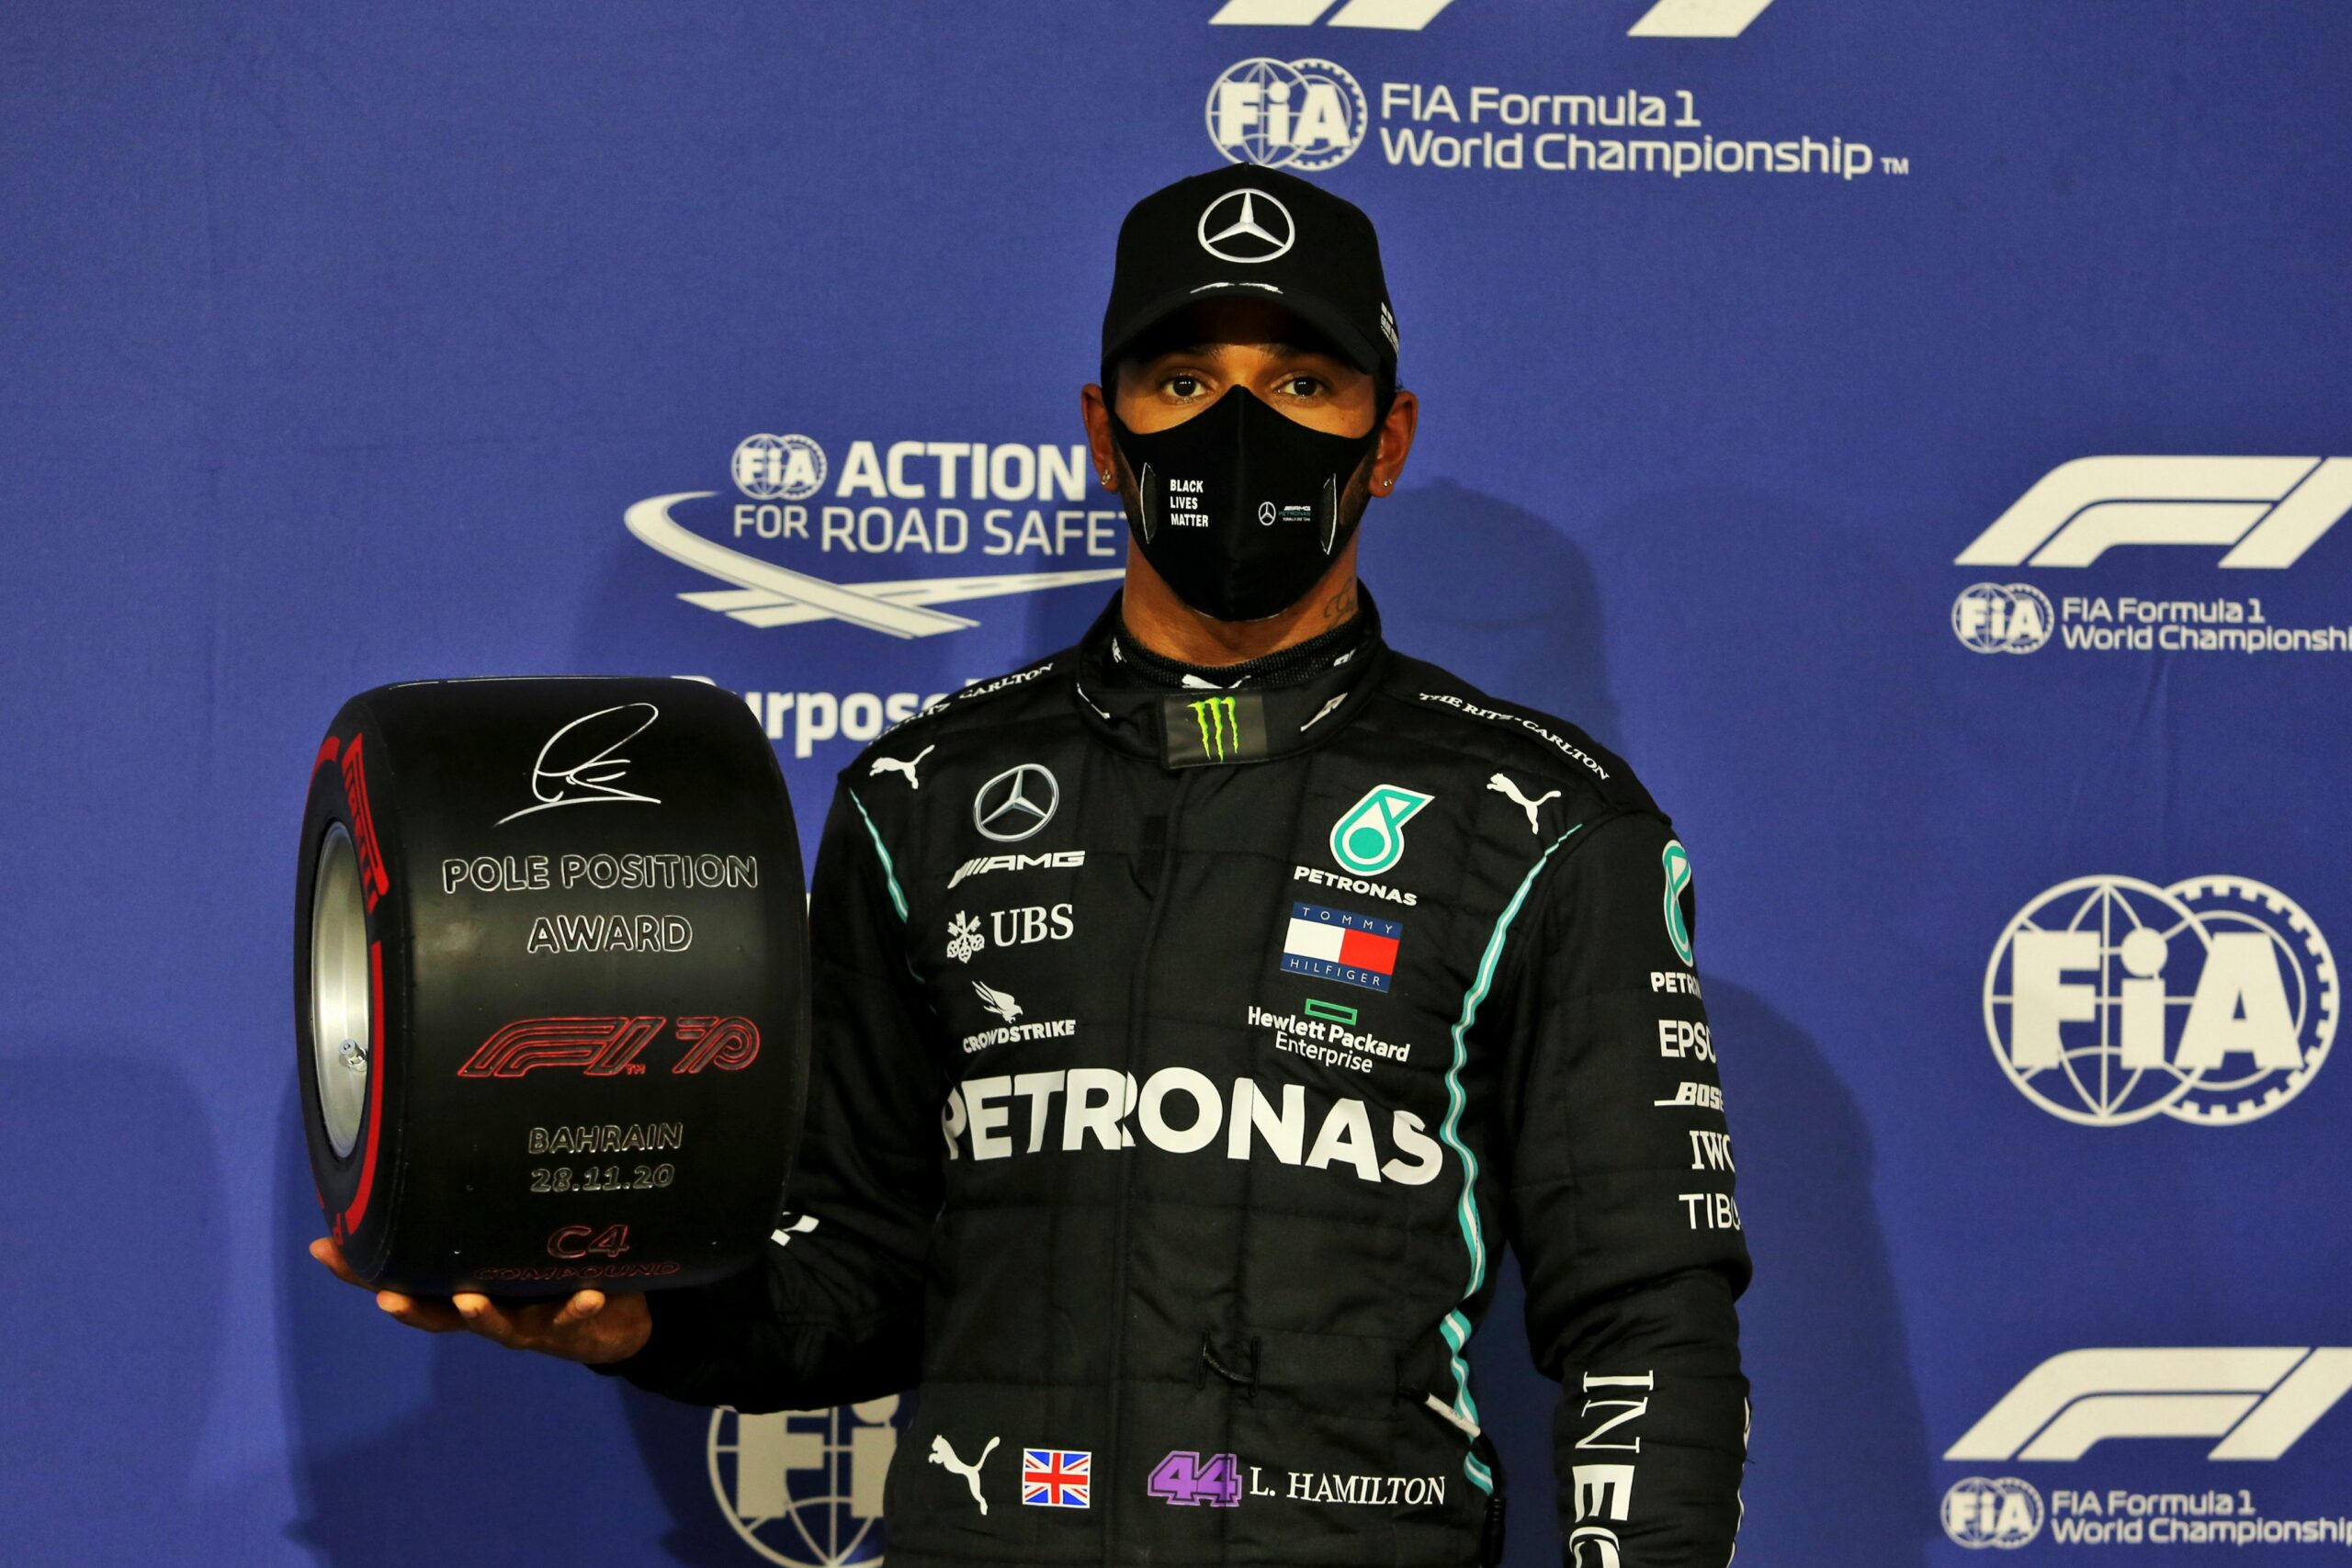 Hamilton's 98th career pole leads Mercedes 1-2